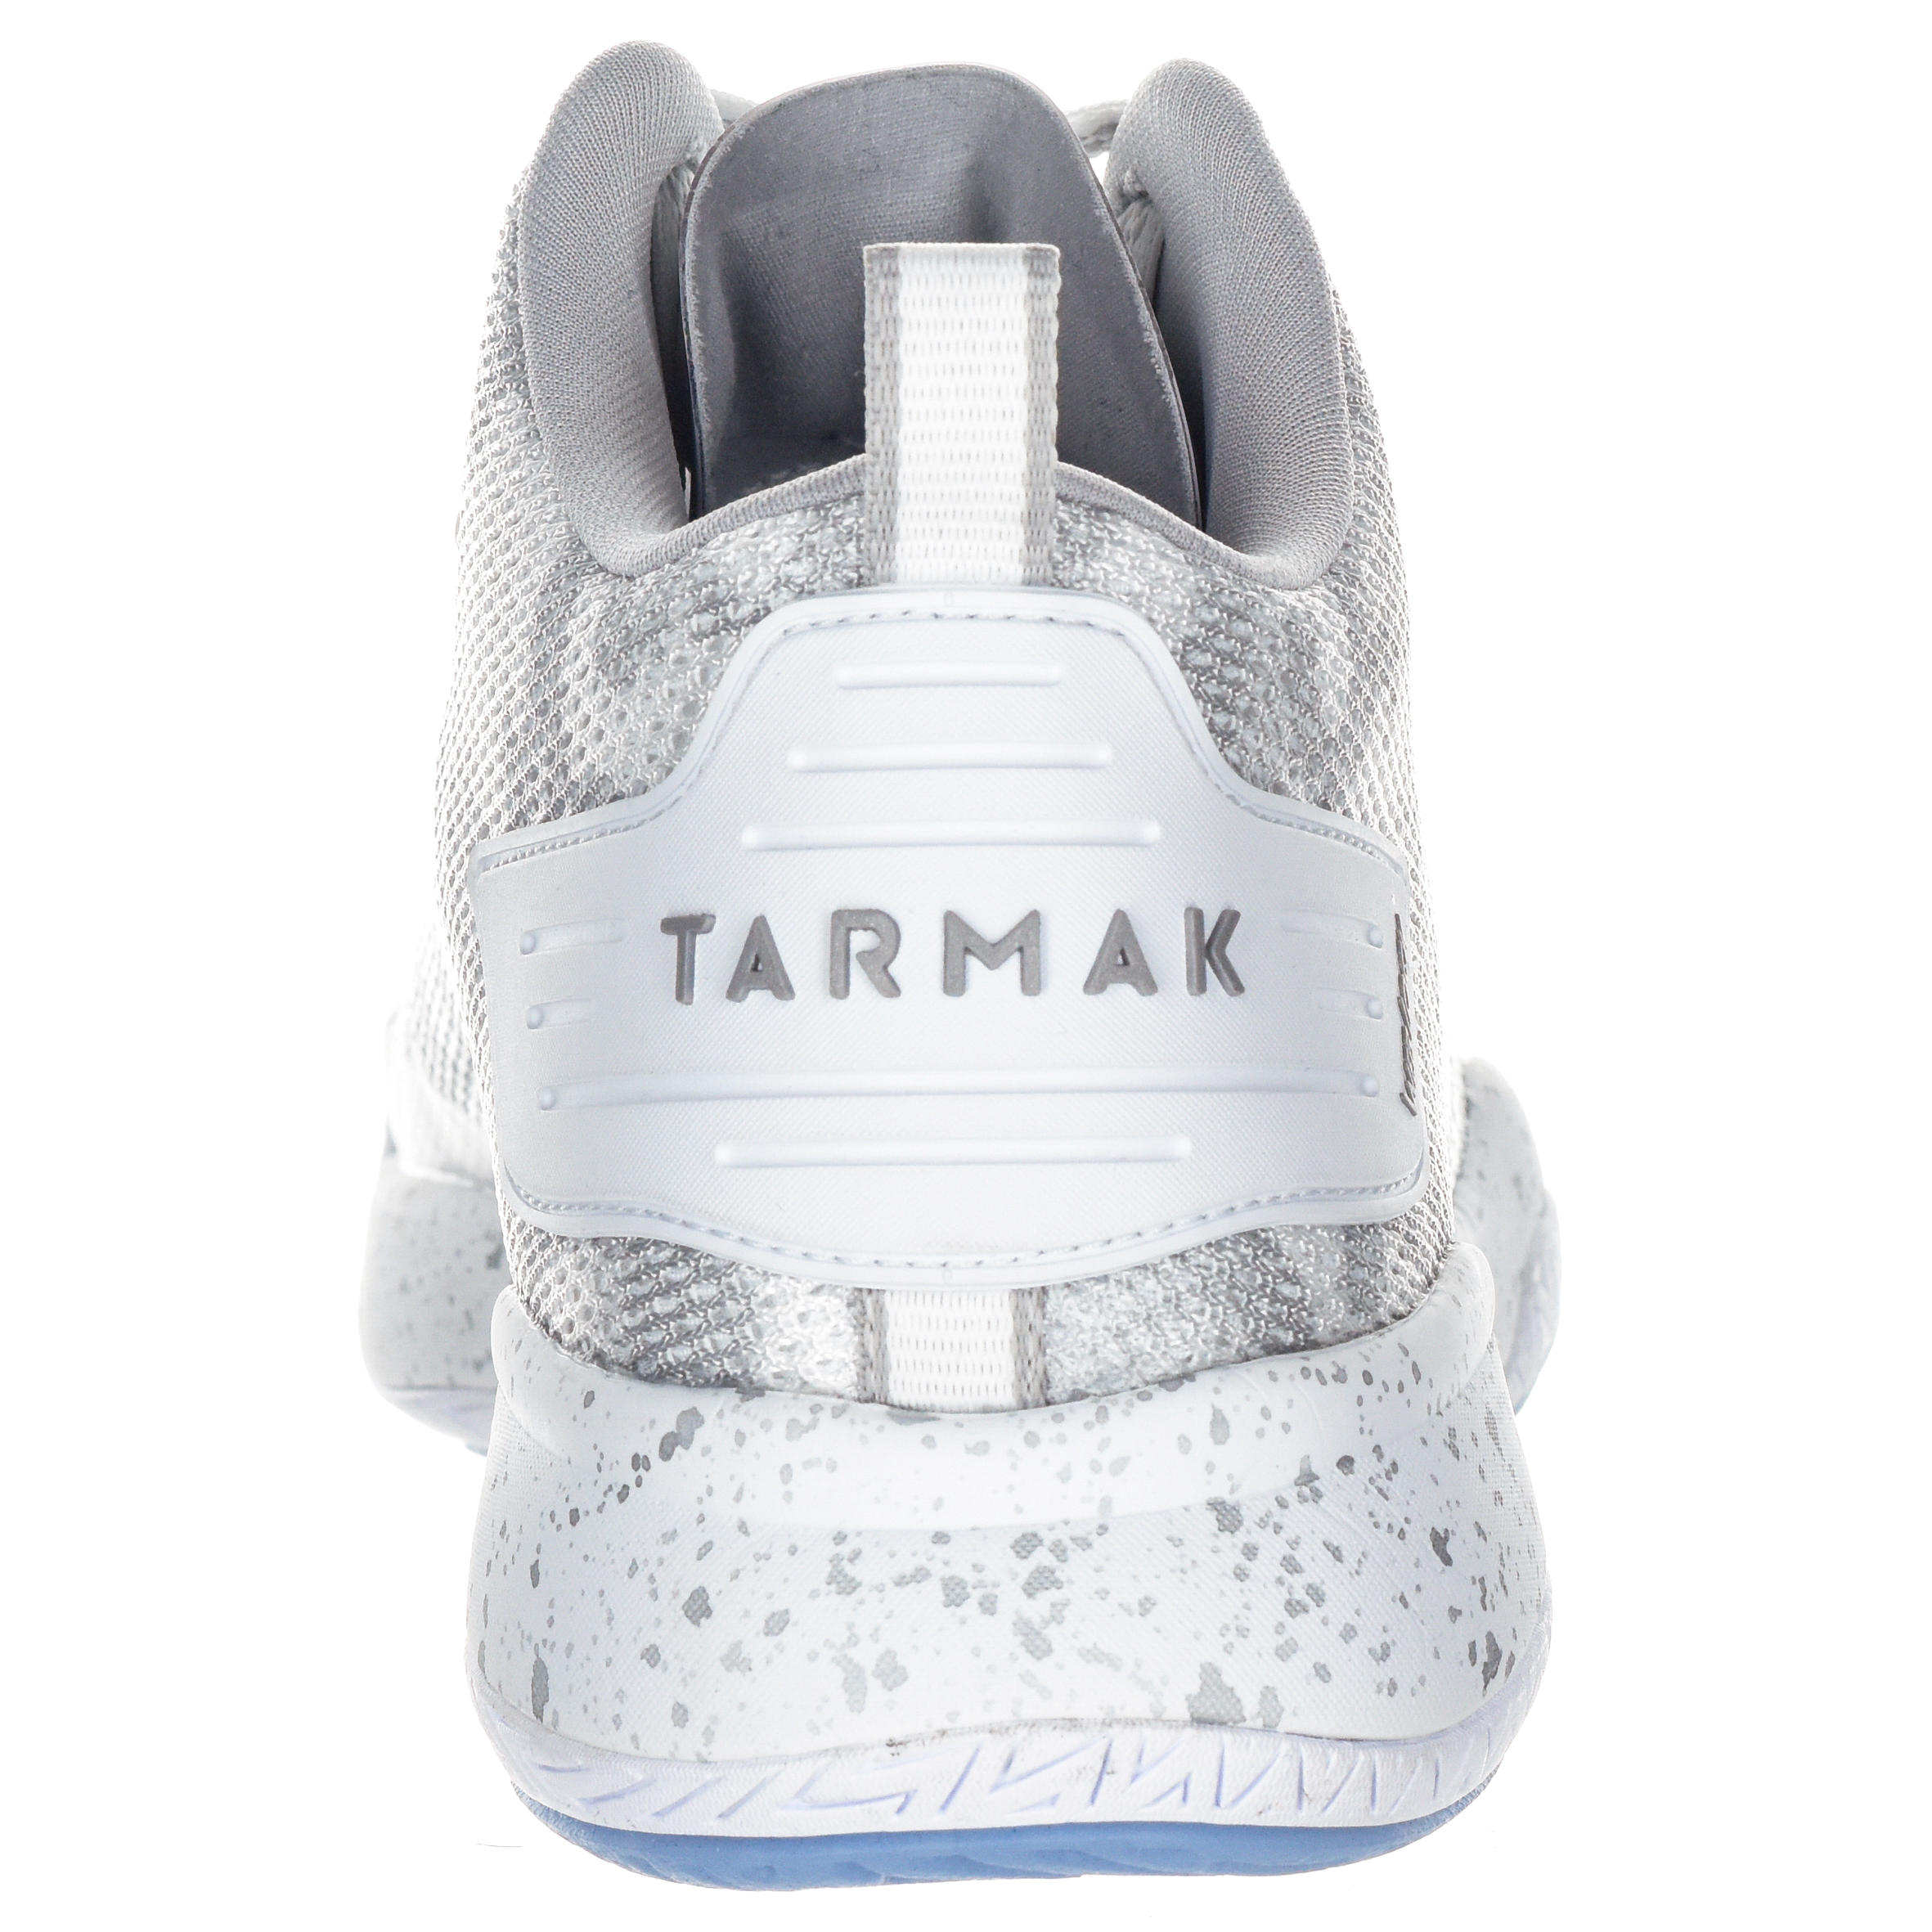 tarmak shoes review